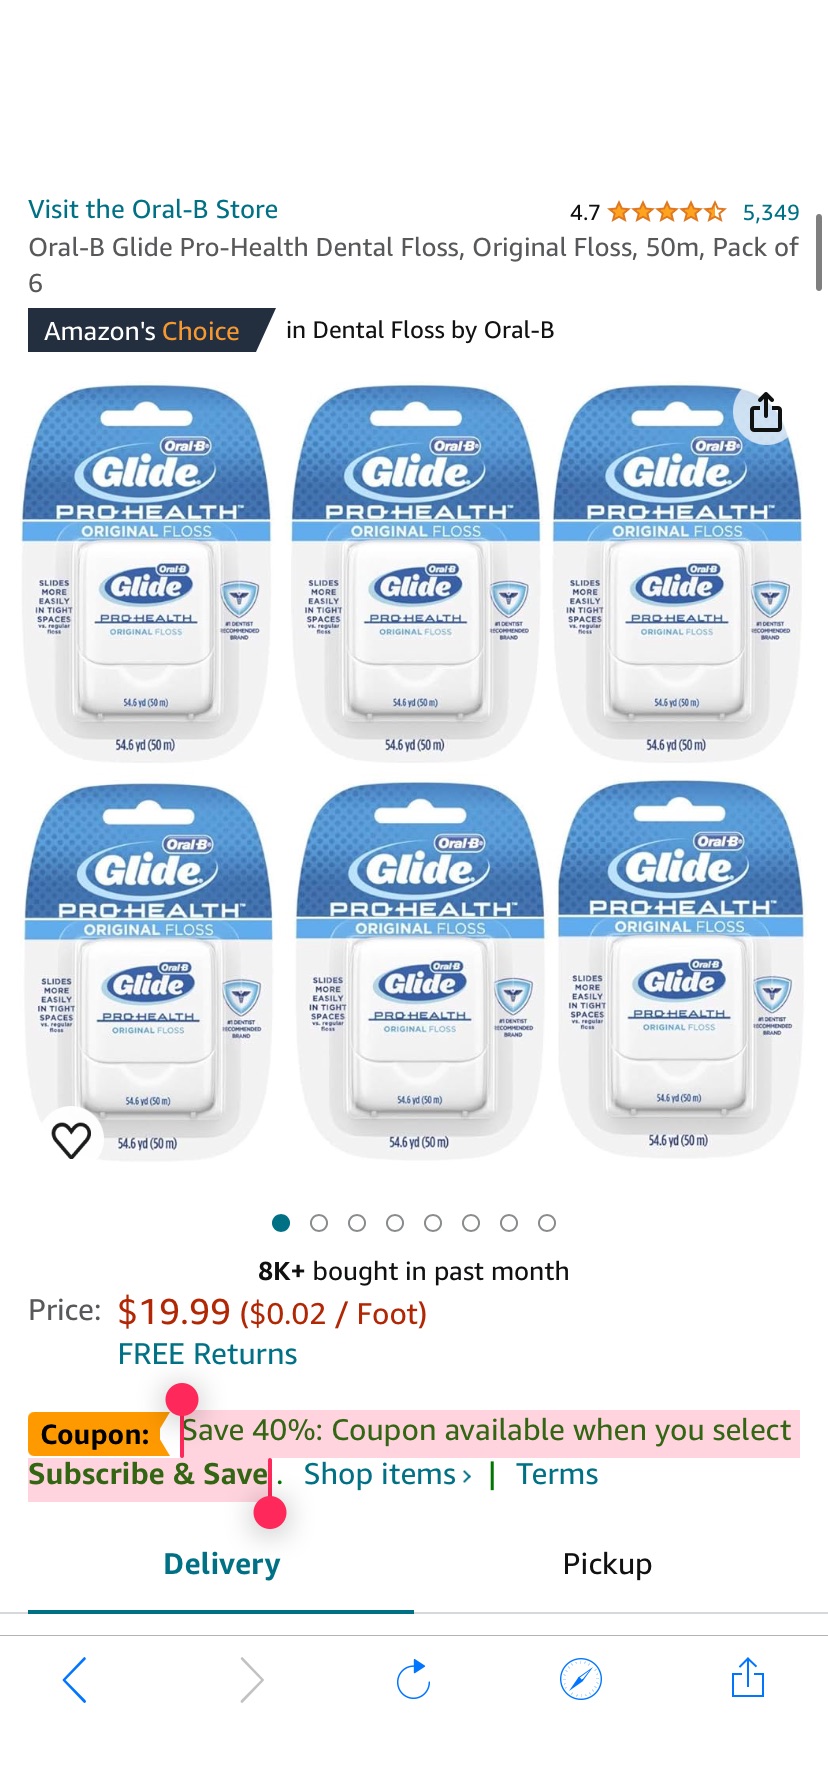 Amazon.com: Oral-B Glide Pro-Health Dental Floss, Original Floss, 50m, Pack of 6 : Beauty & Personal Care